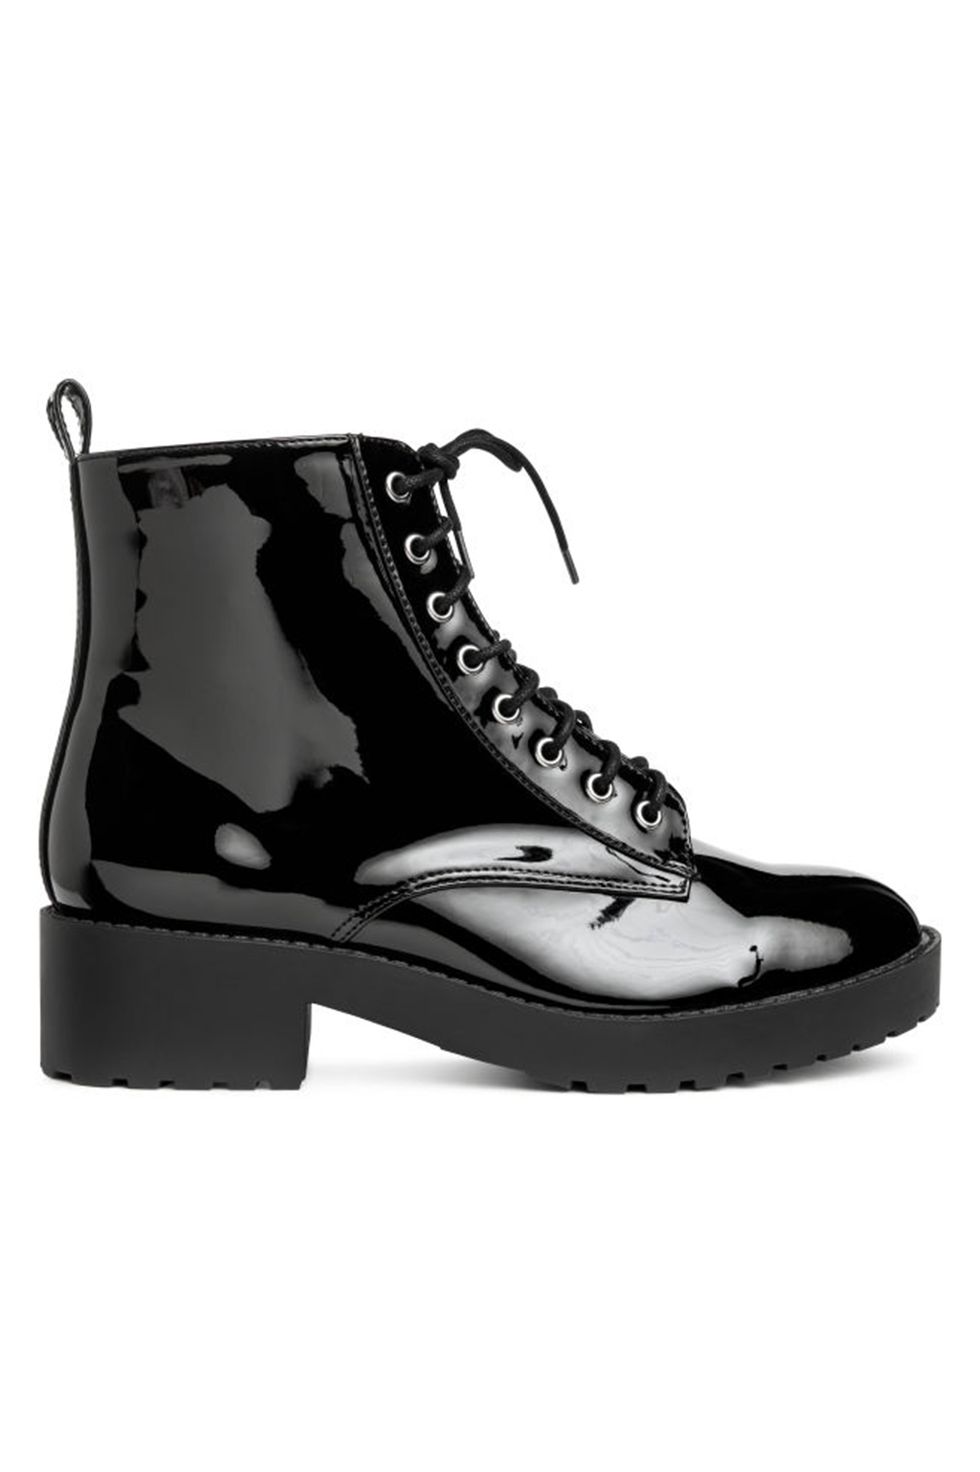 Footwear, Shoe, Black, Boot, Hiking boot, Leather, 